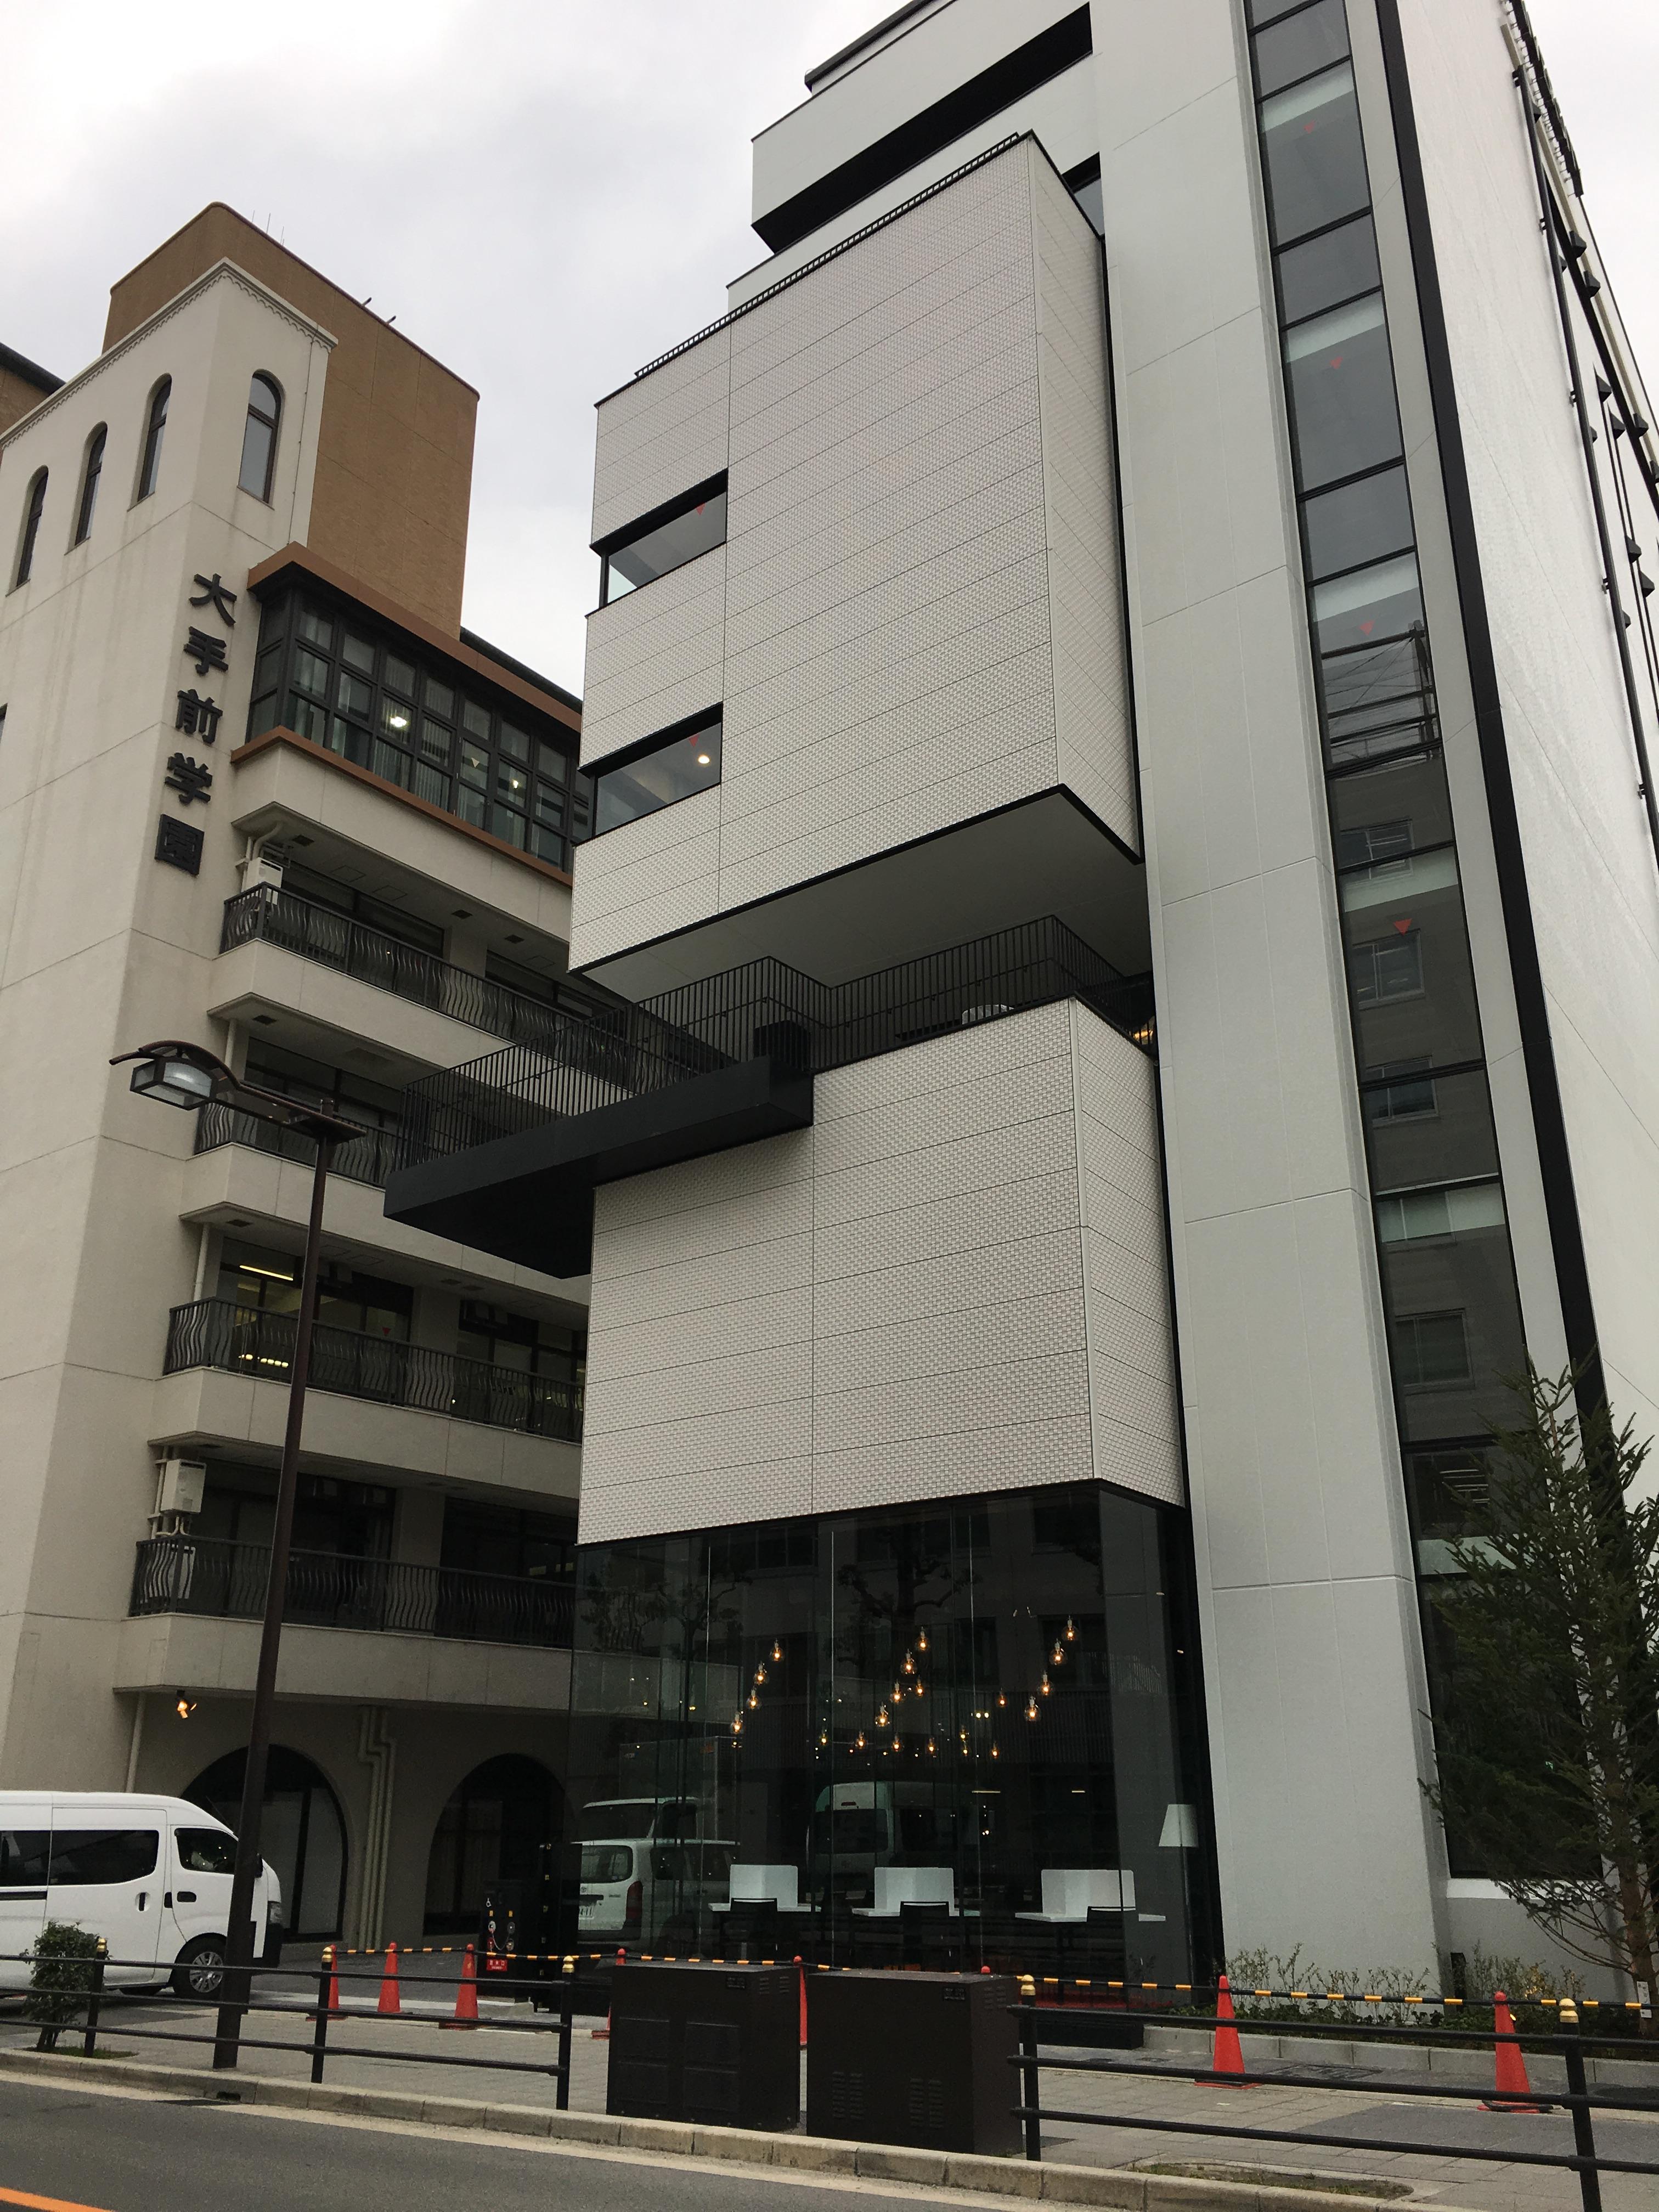 大手前大学大阪大手前キャンパス新校舎完成、竣工式を挙行／2019年4月、日本初の国際看護学部が開設